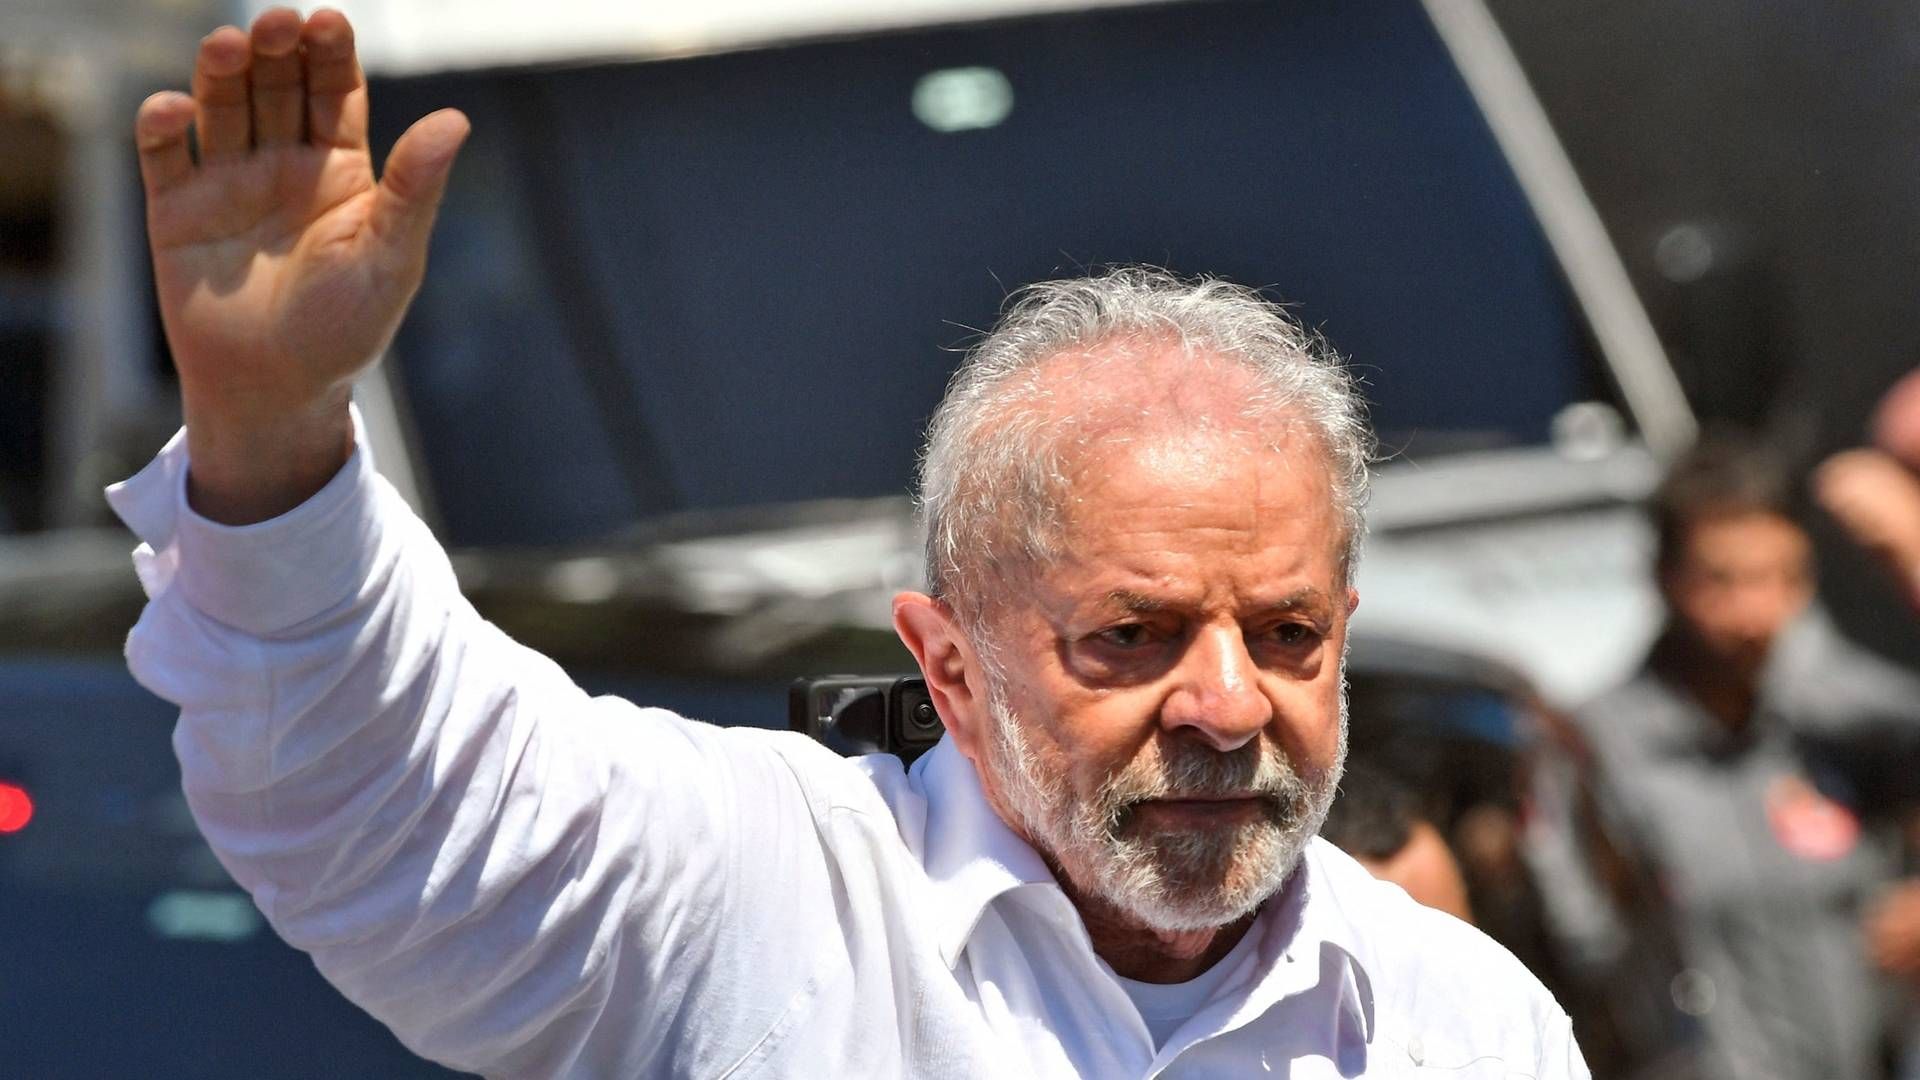 Luiz Inacio Lula da Silva vandt en snæver sejr over Jair Bolsonaro i kampen om den brasilianske præsidentpost. | Foto: NELSON ALMEIDA/AFP / AFP